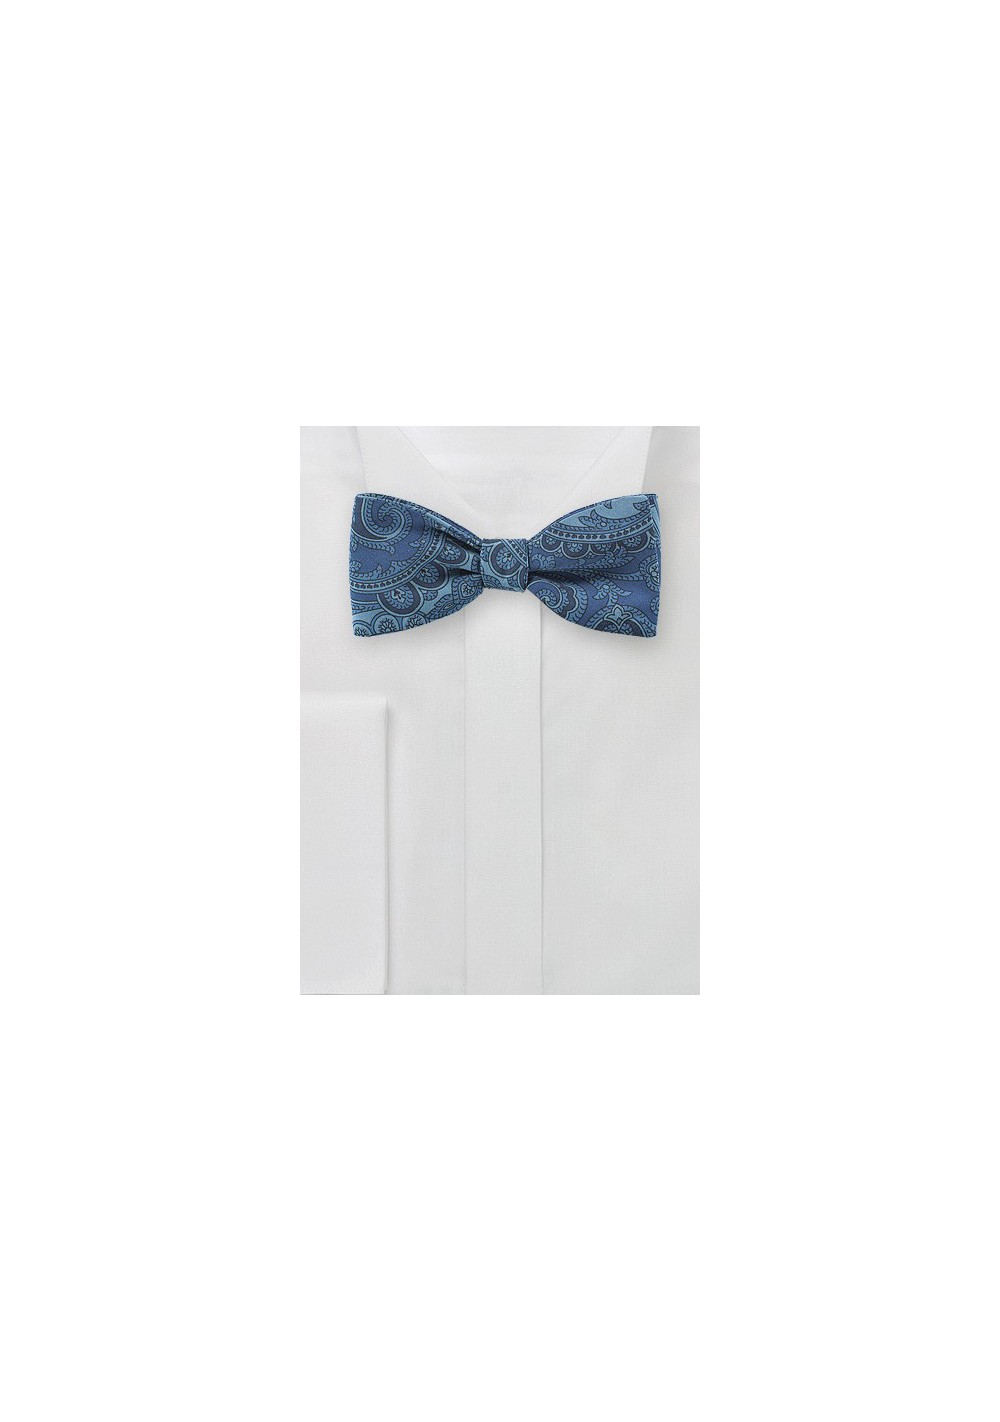 Paisley Silk Bow Tie in Denim Blue